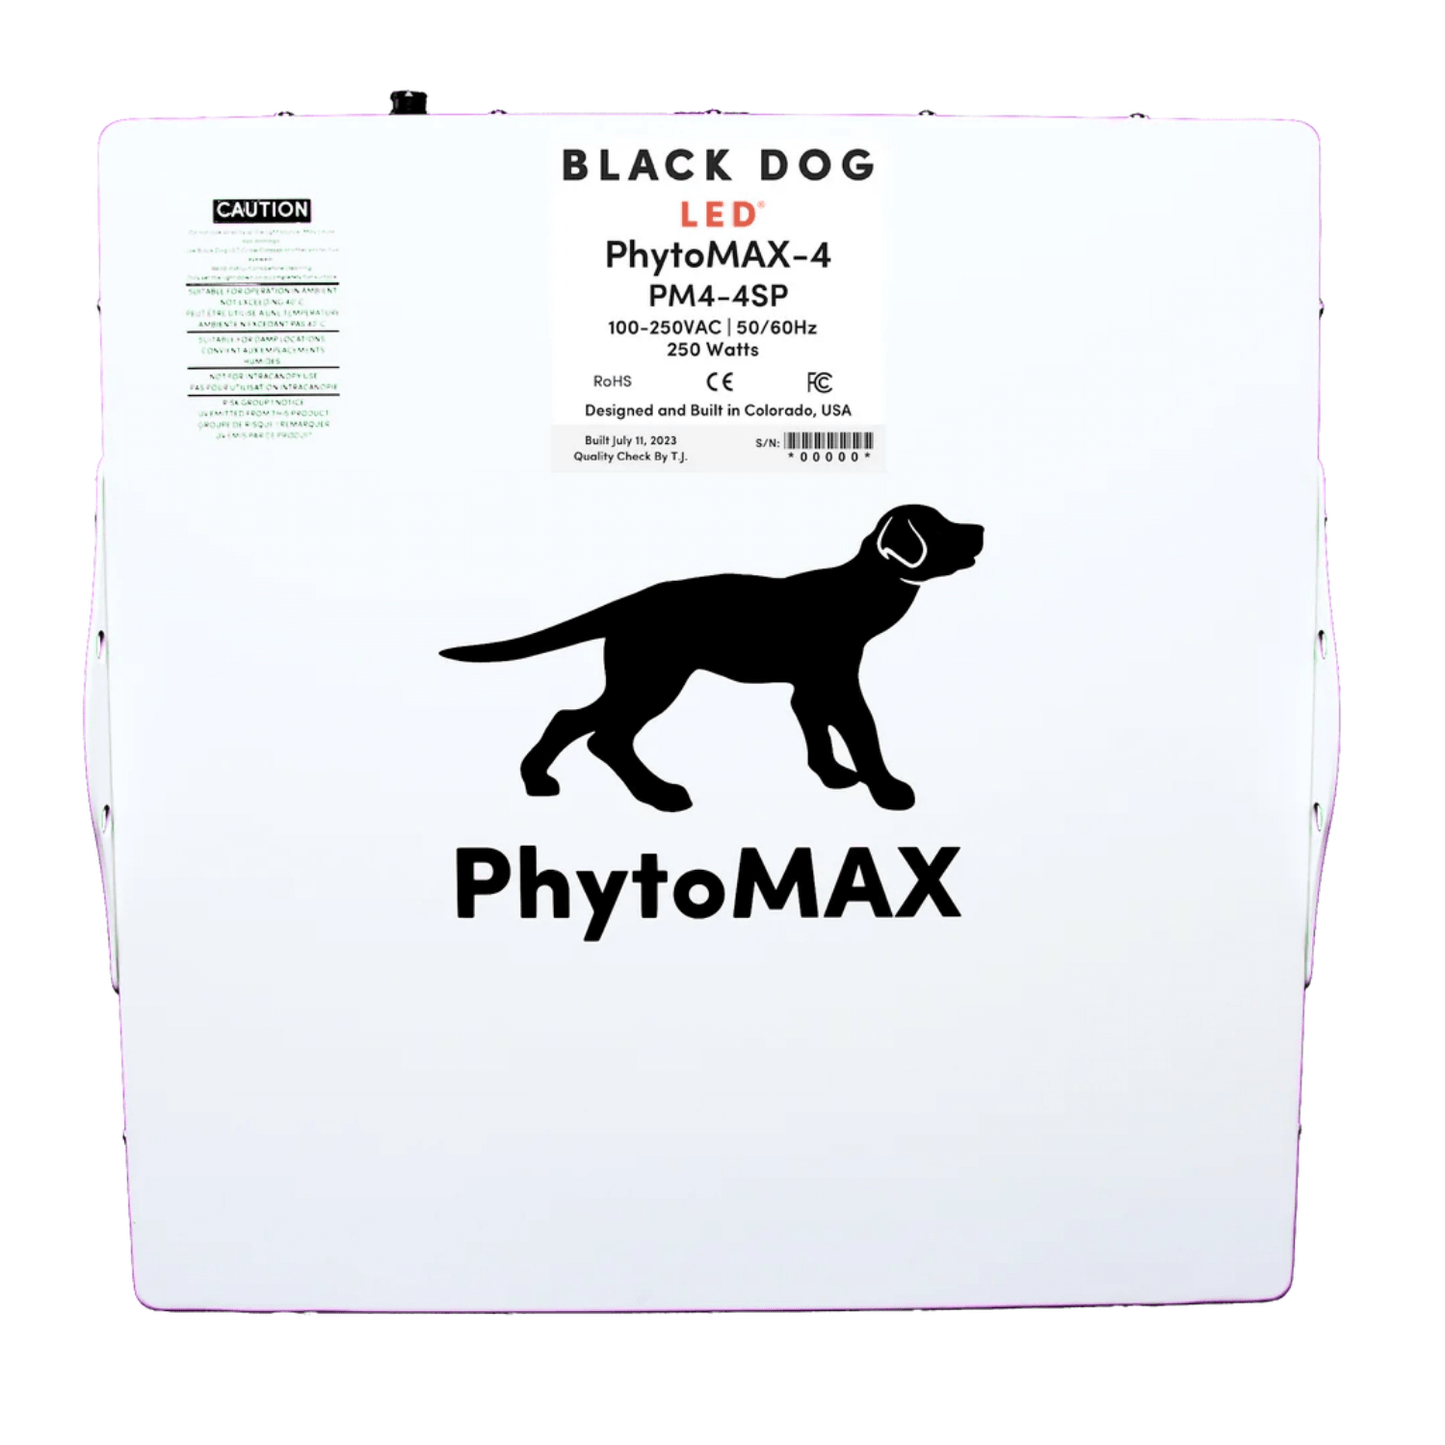 Black Dog LED PhytoMAX-4 4SP 250W LED Grow Light BD001-0102 Grow Lights